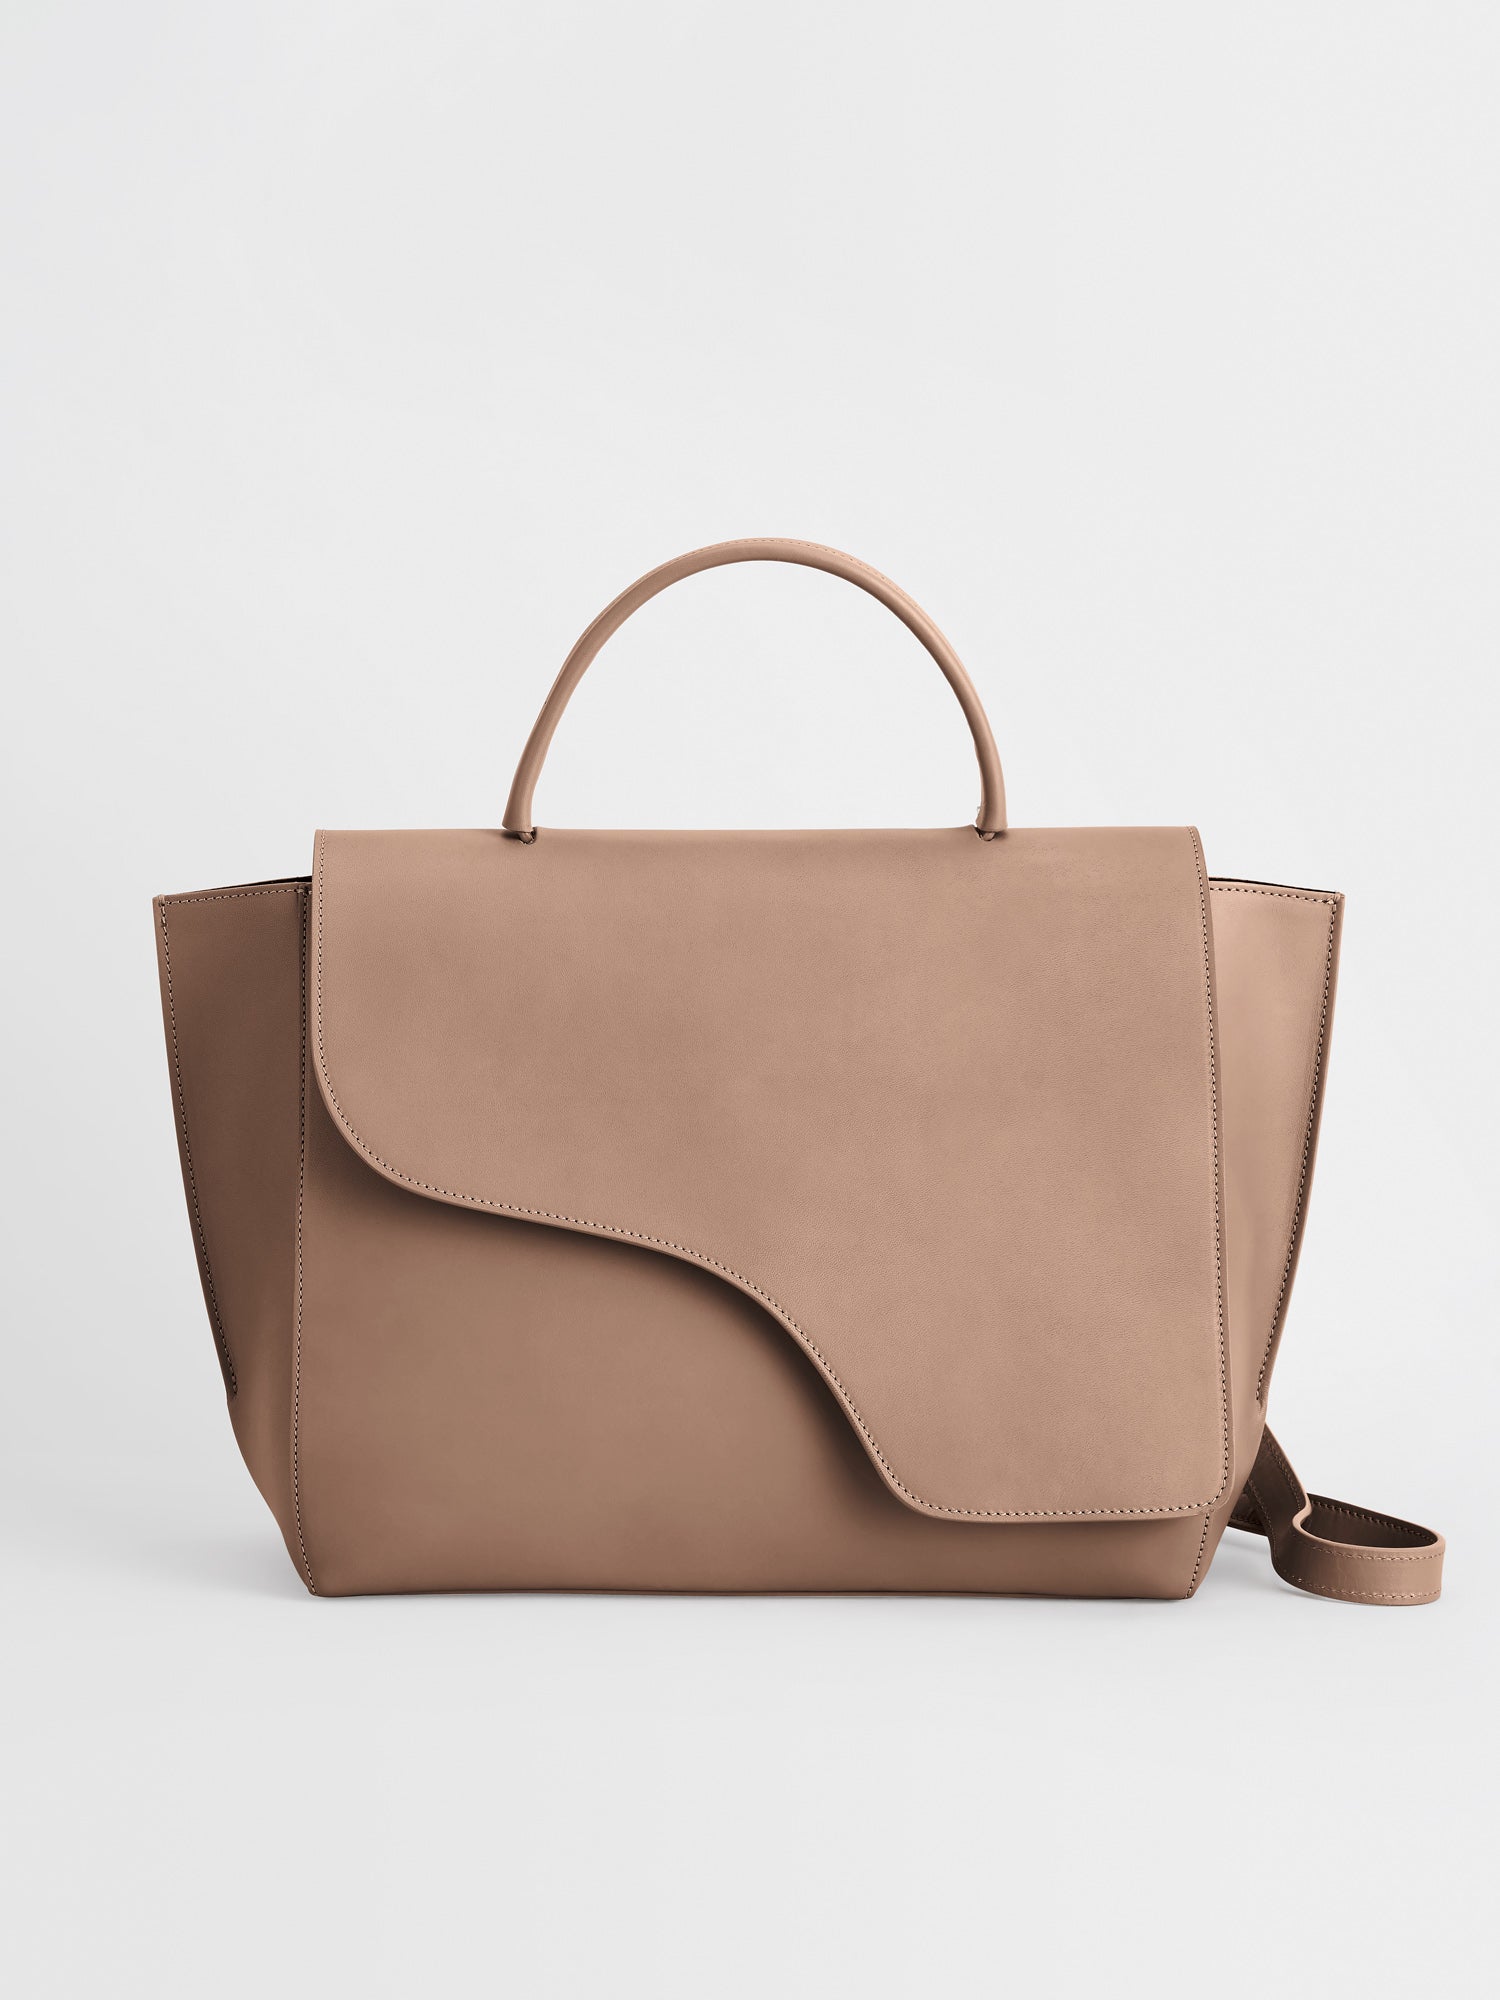 Pienza Black Leather Large tote Bag – ATP Atelier